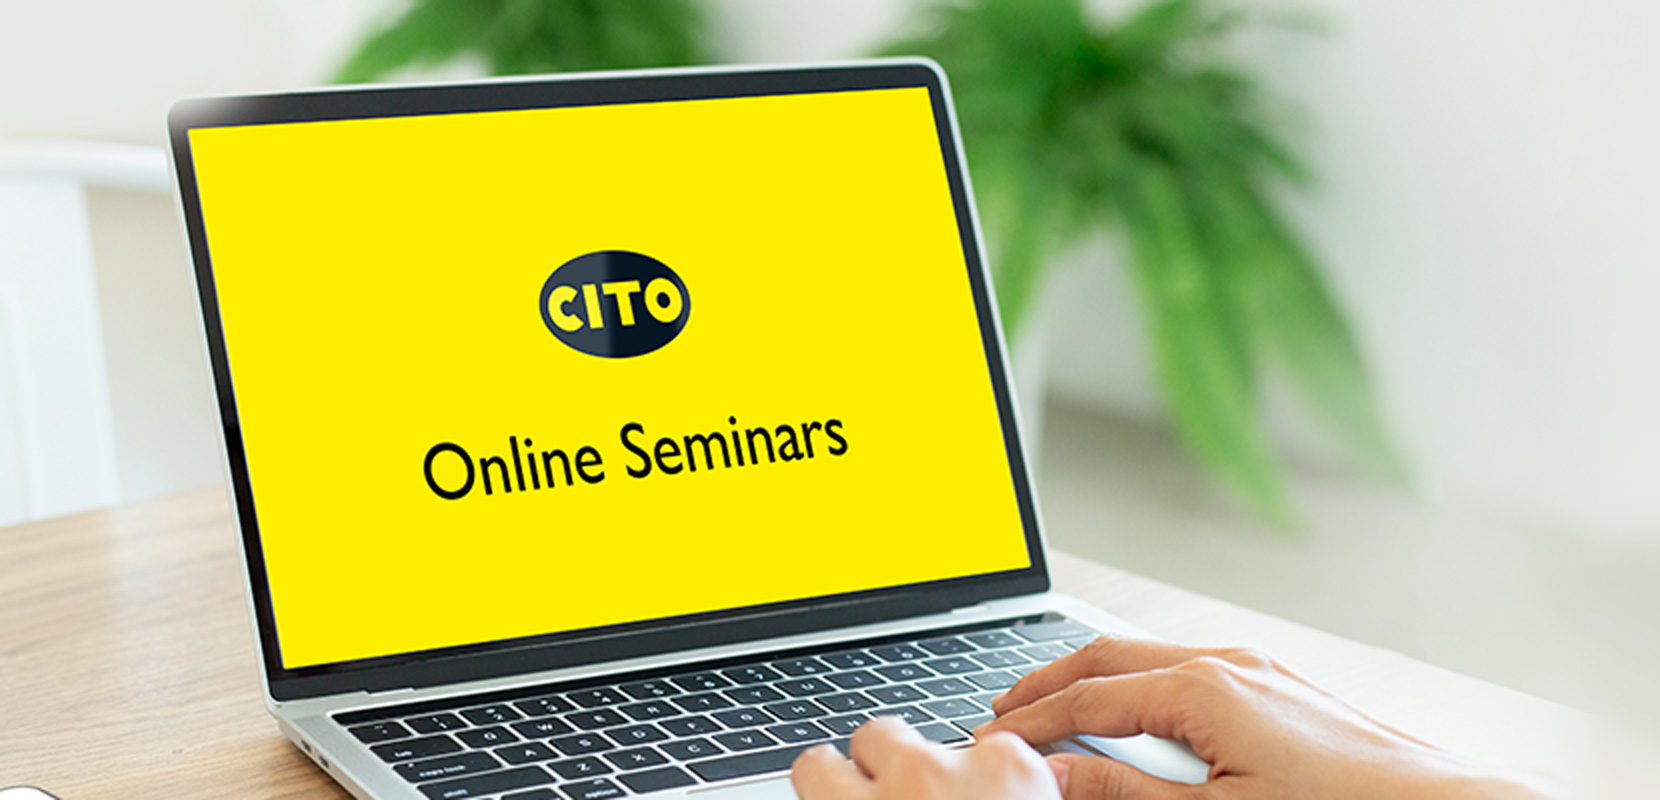 CITO Online Seminars